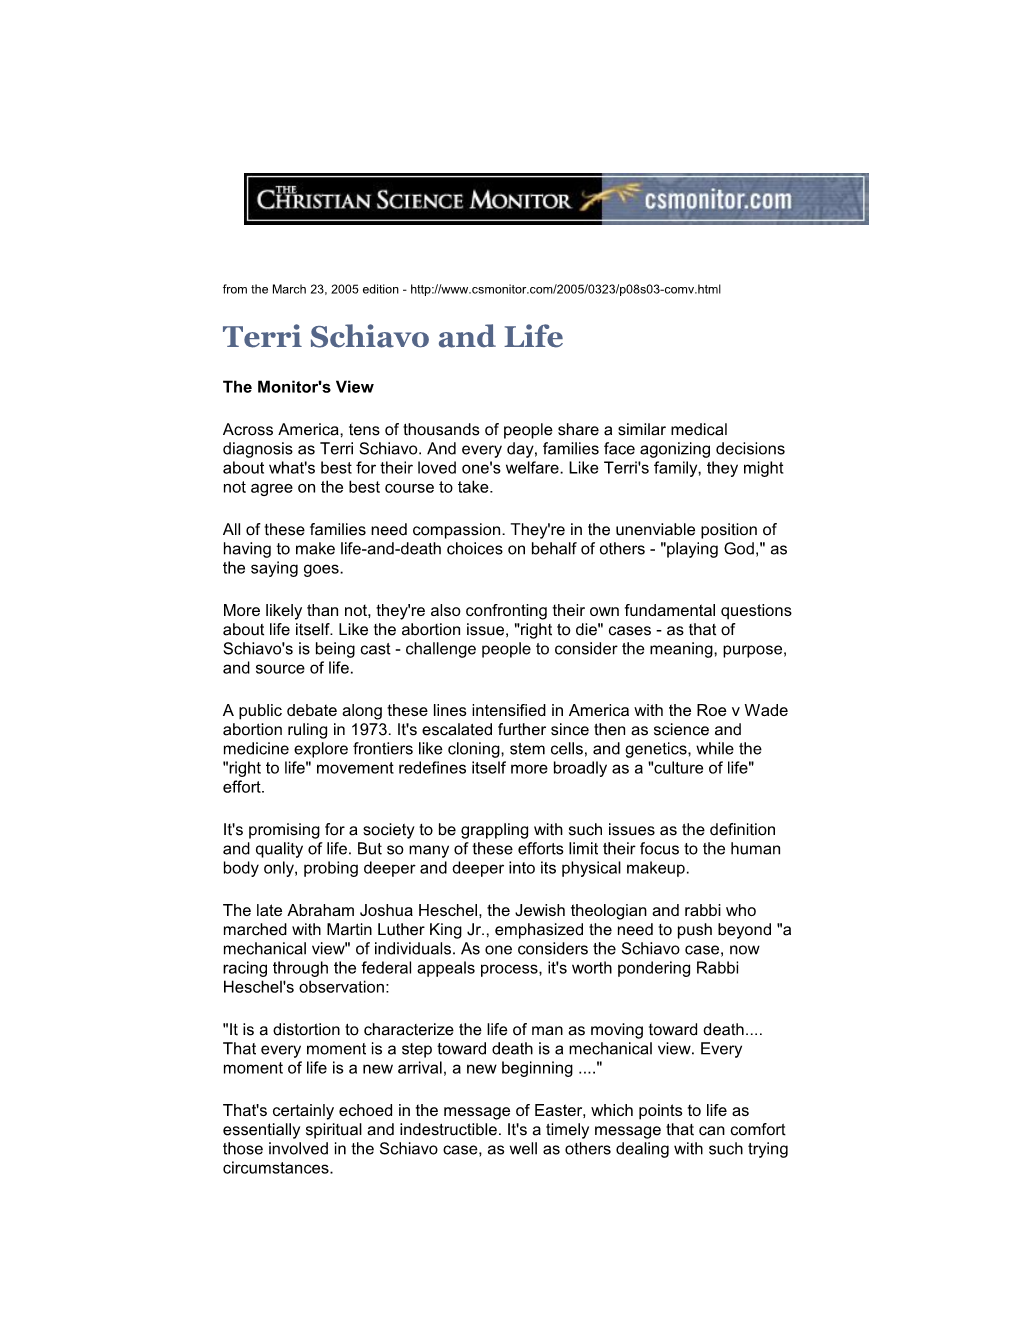 Terri Schiavo and Life